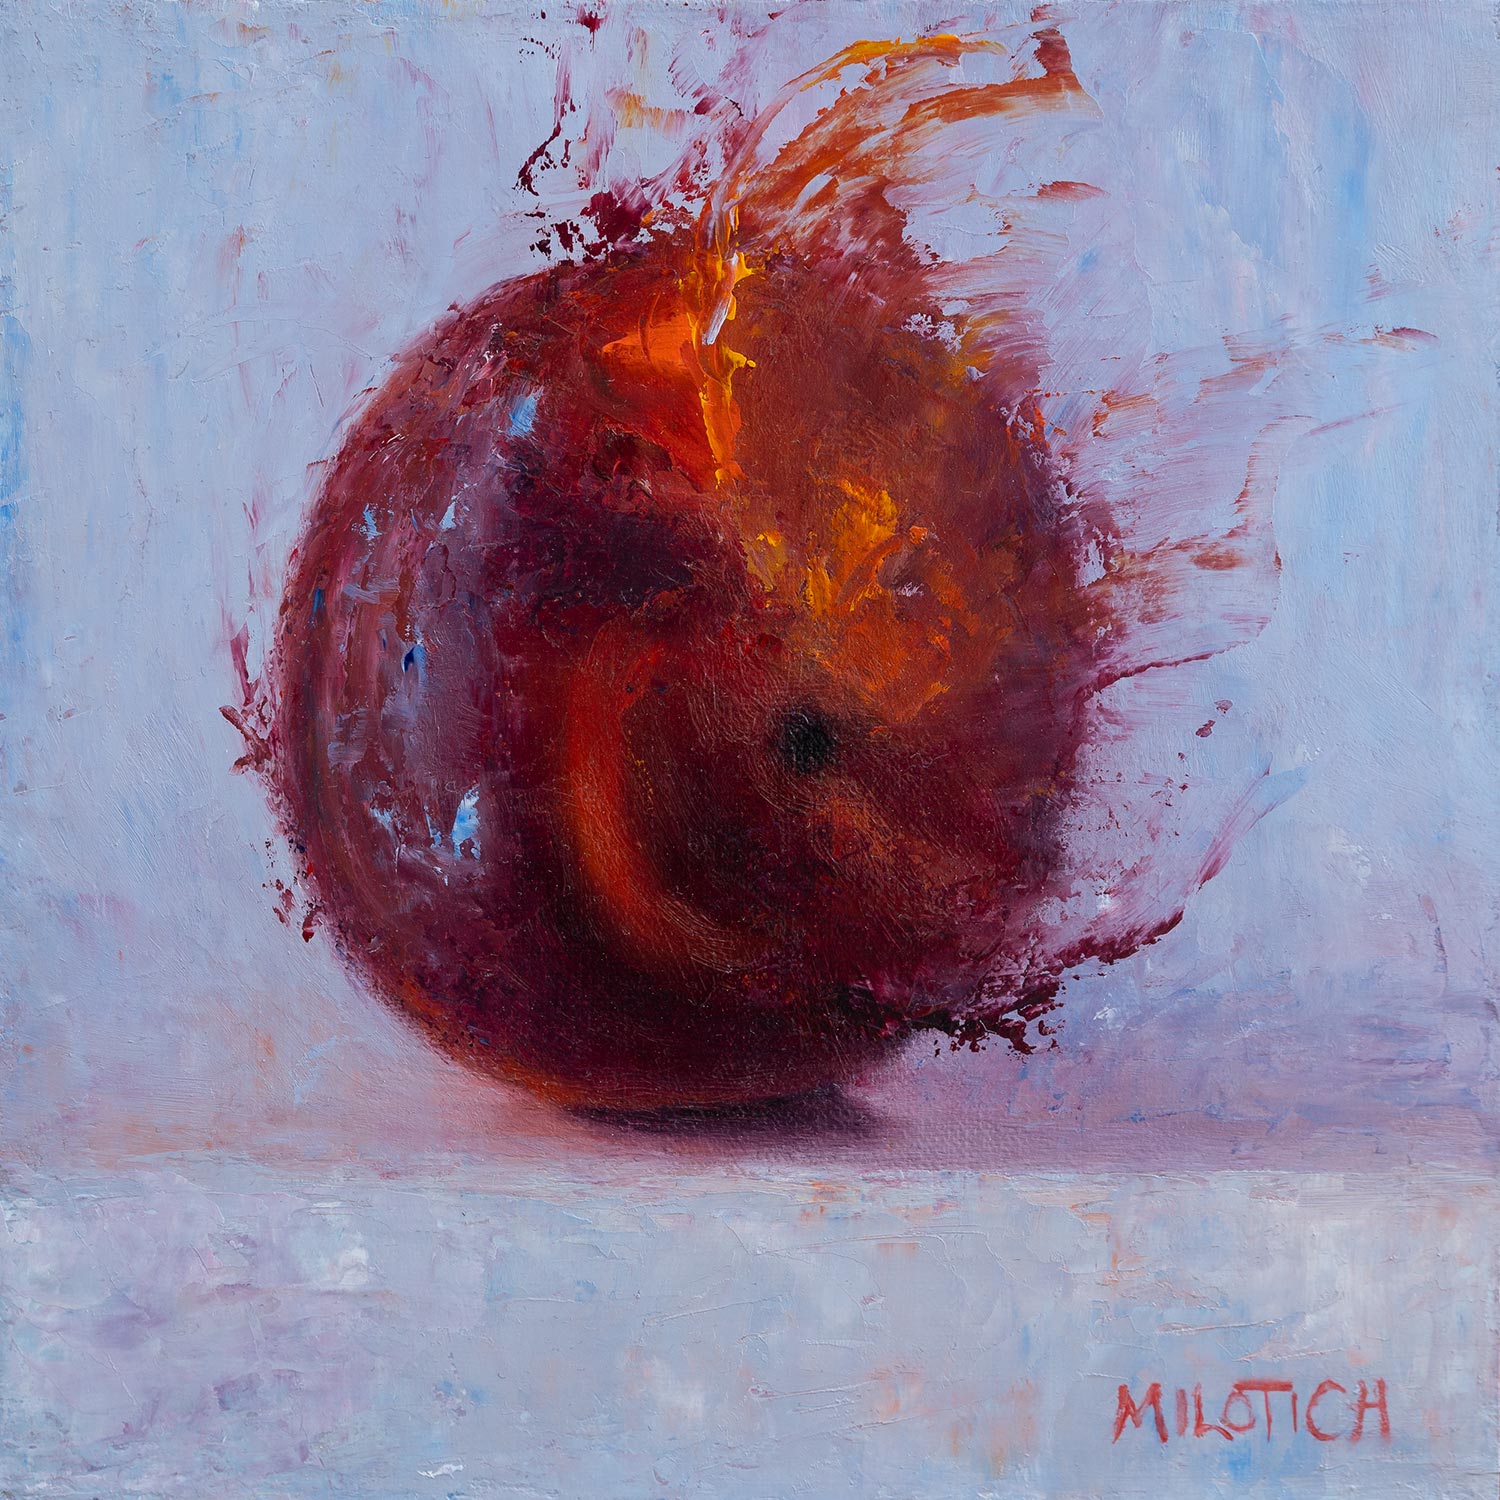 Wild Peach, an original oil painting by Ute Milotich